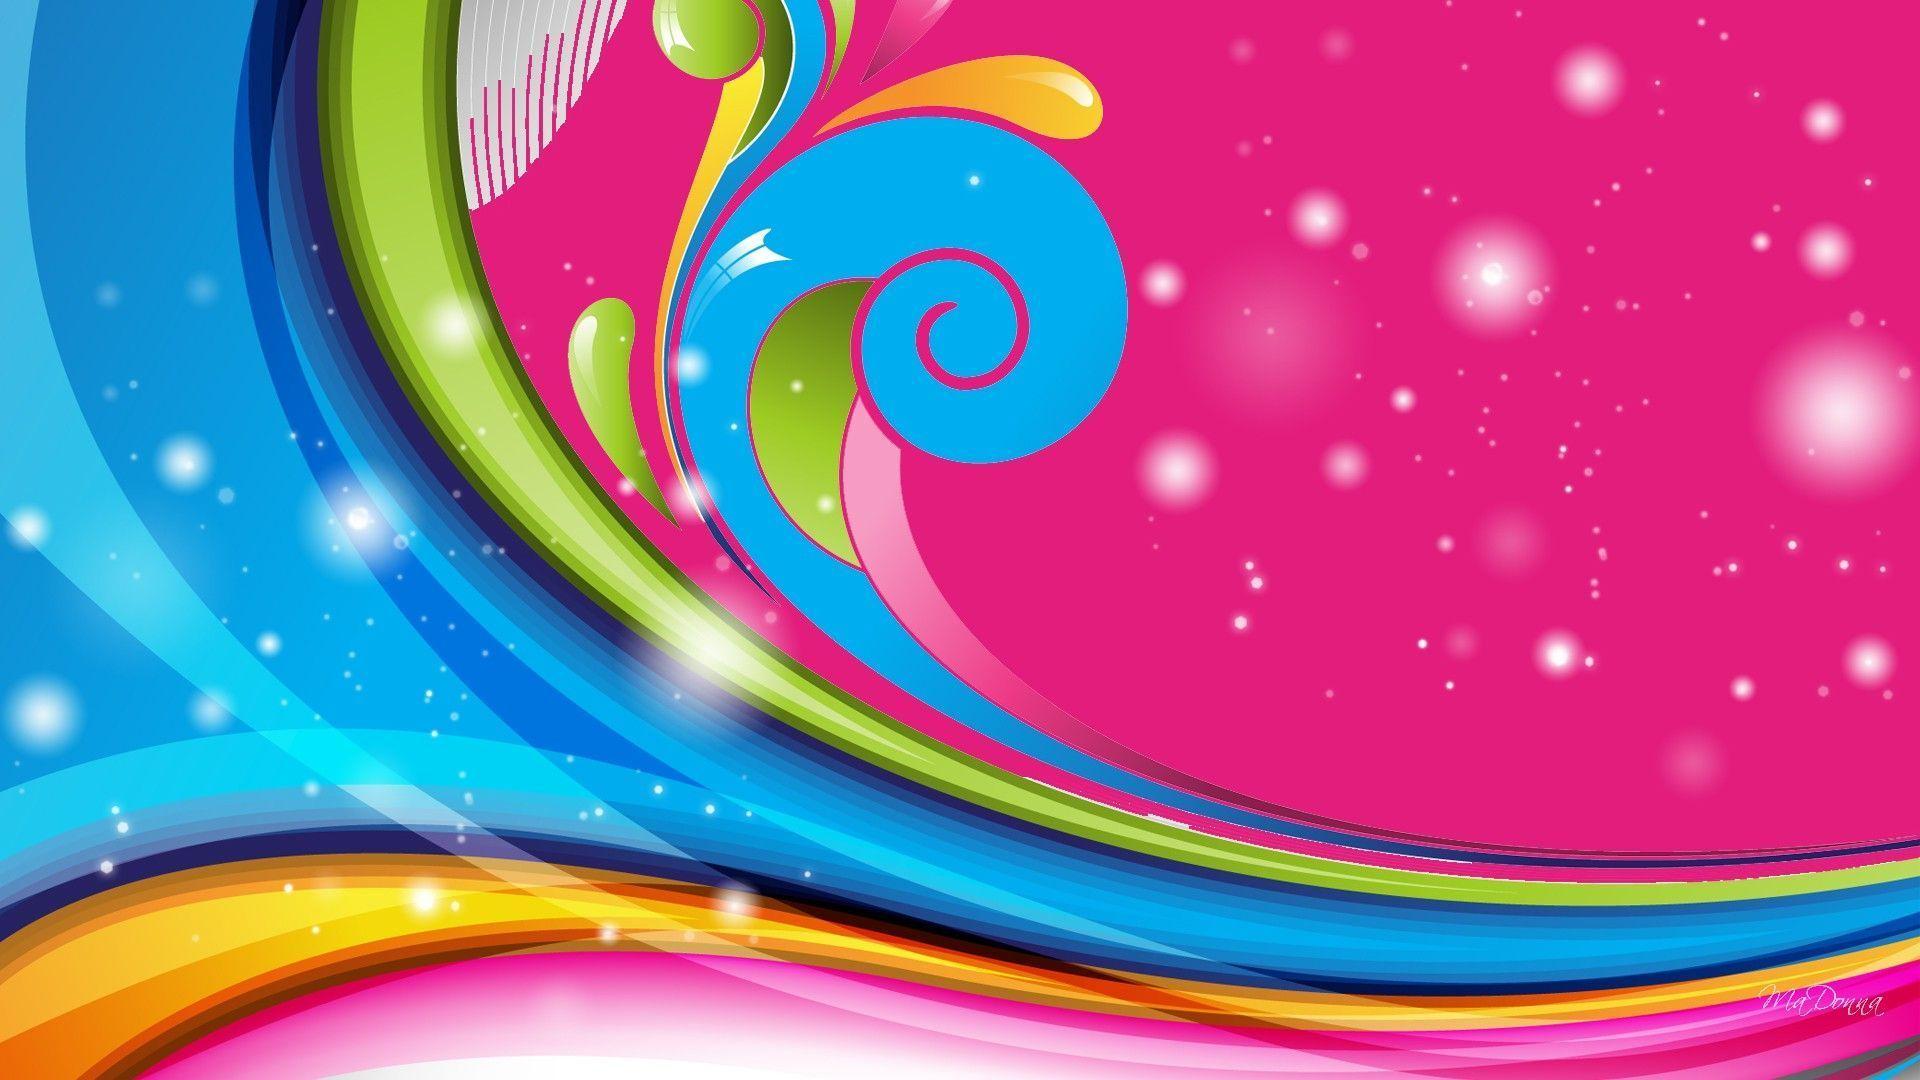 Abstract Colorful Wallpaper 4 3043 Image HD Wallpaper